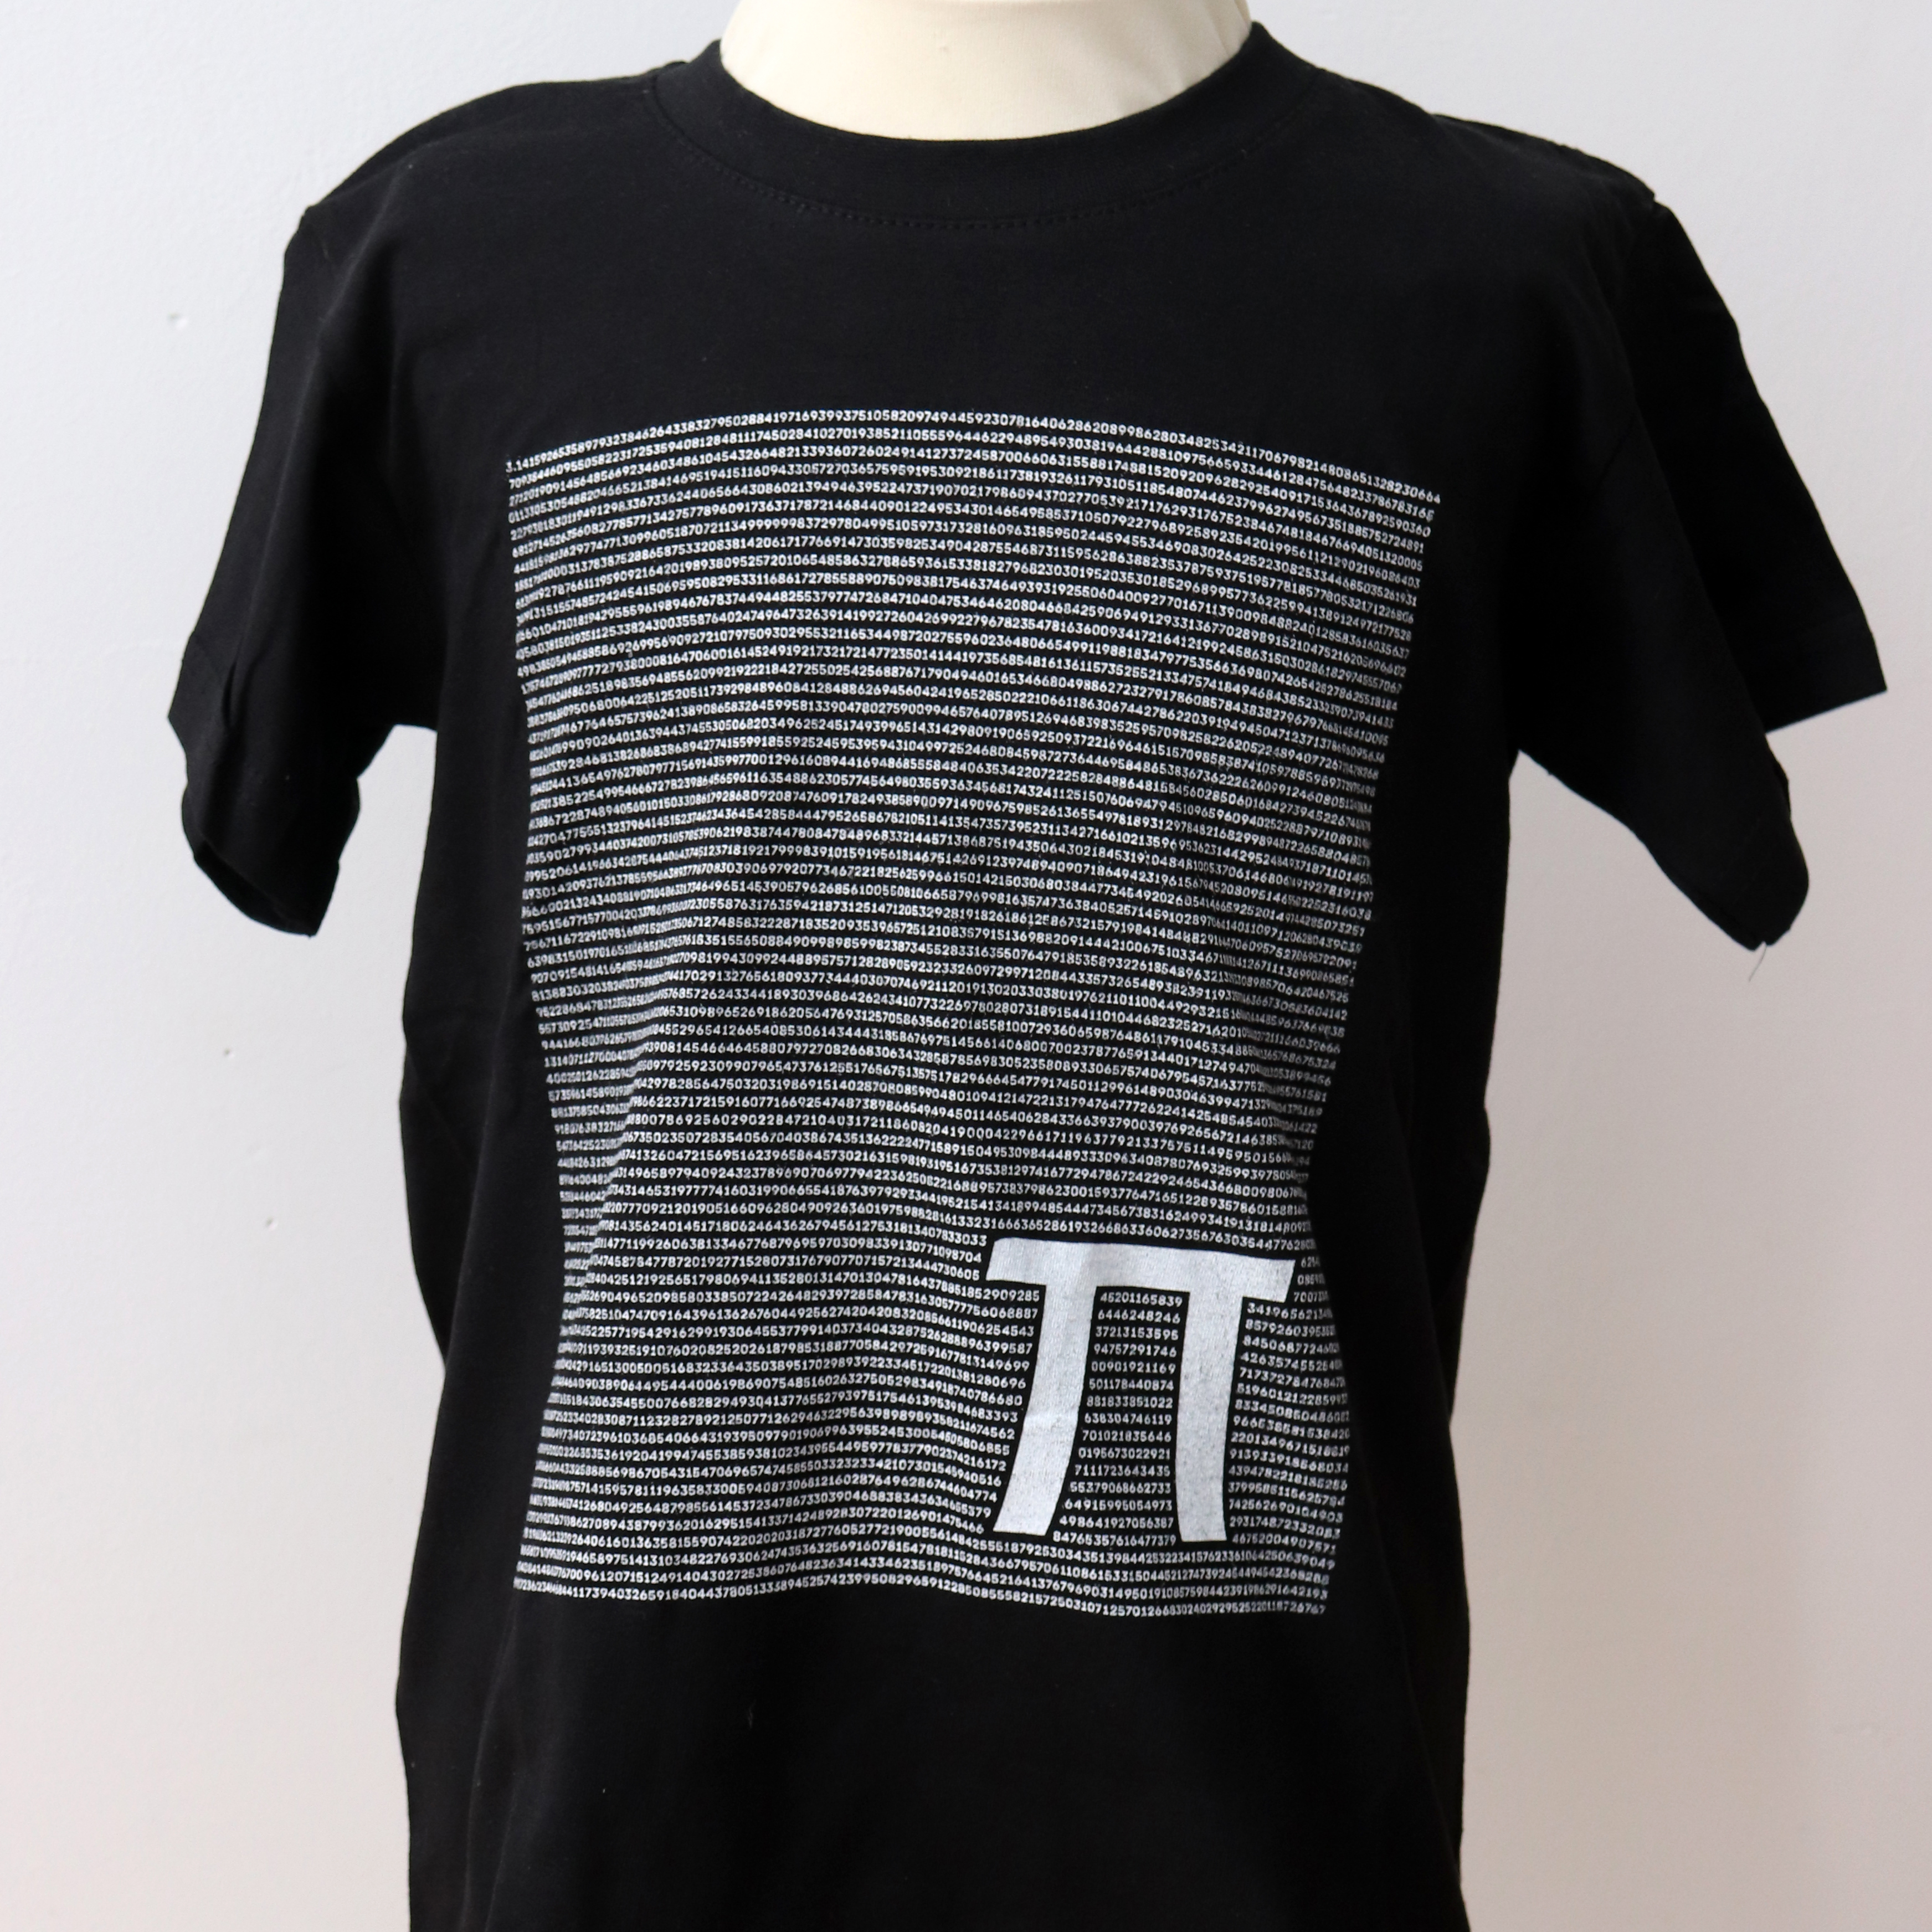 tee shirt "PI" for girls